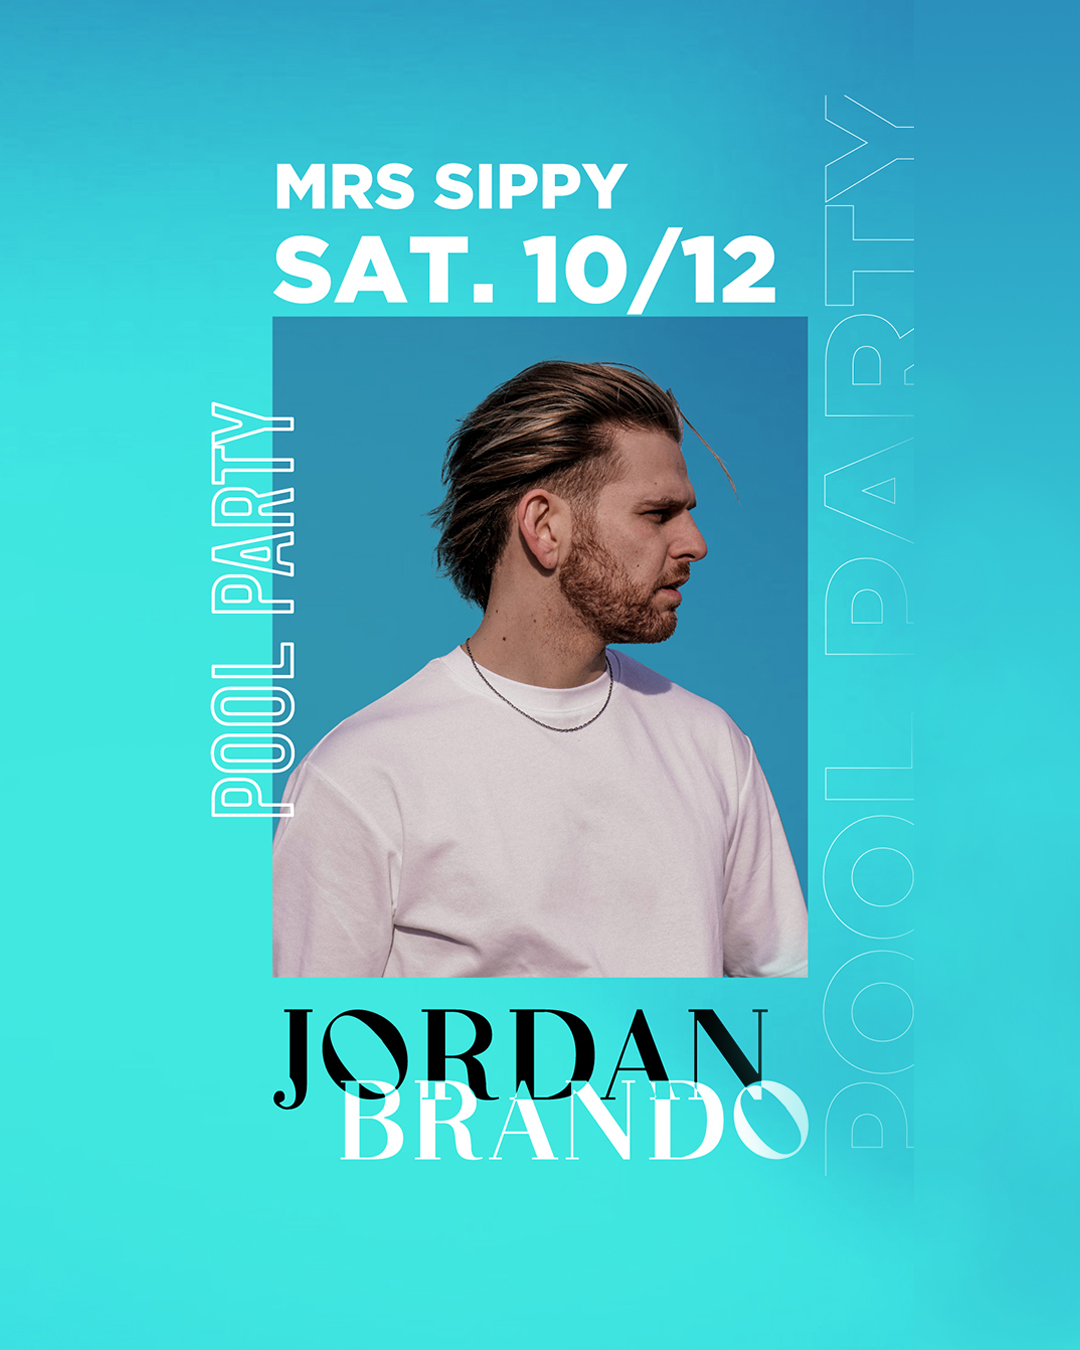 MRS SIPPY PRESENTS JORDAN BRANDO – SATURDAY DECEMBER 10TH thumbnail image